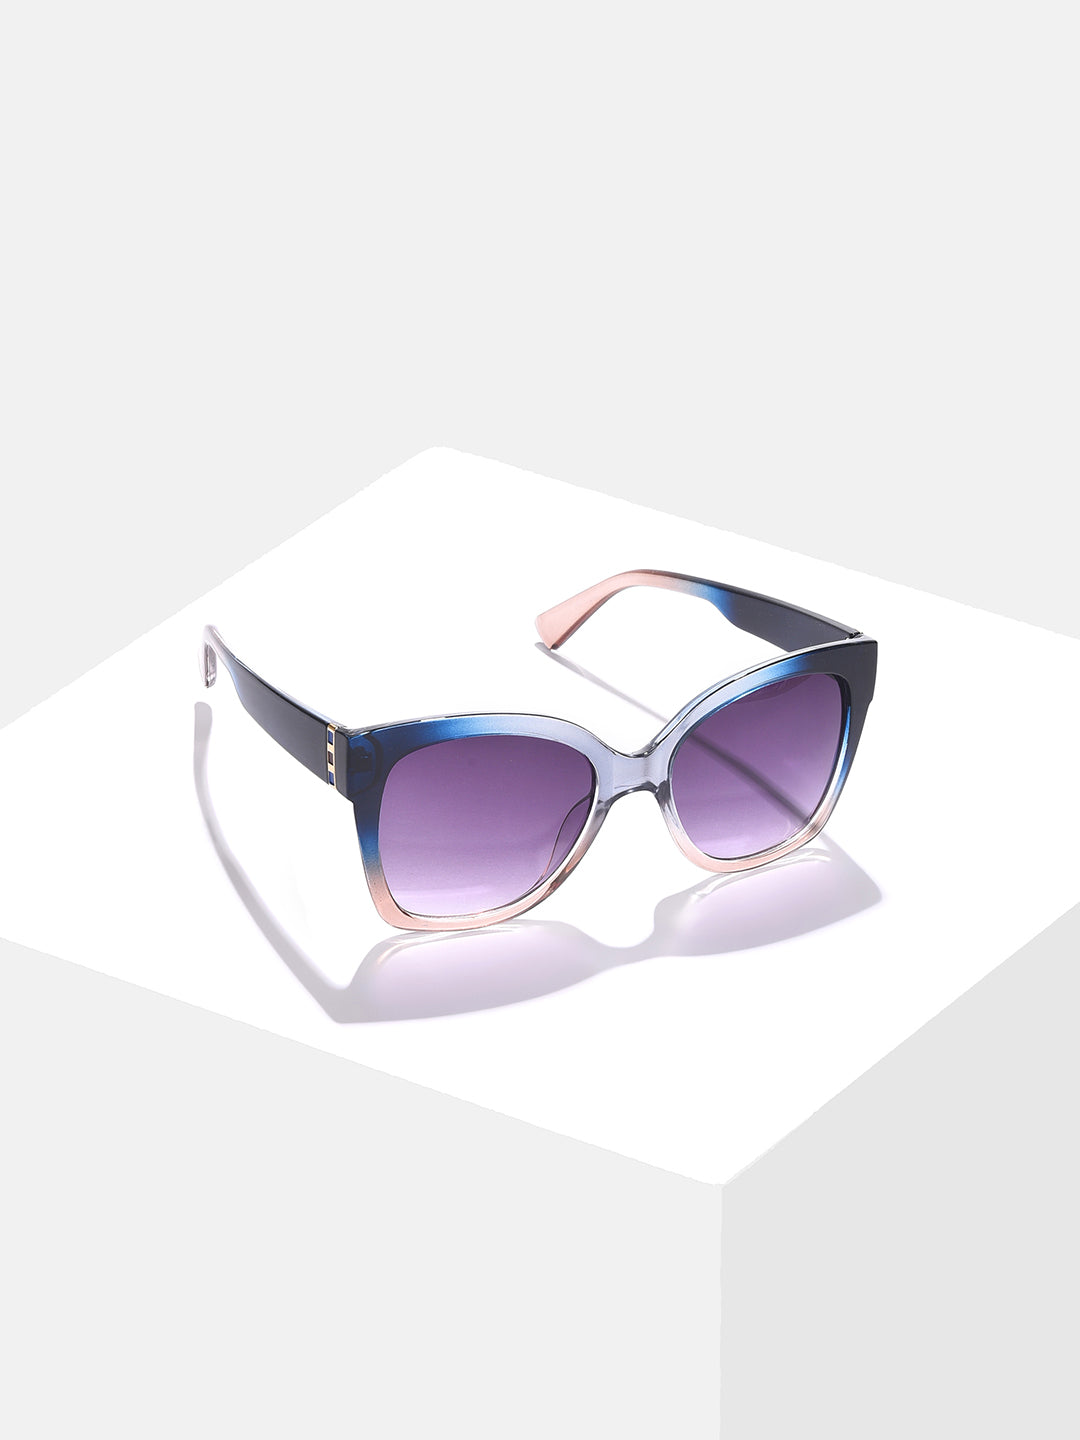 Black Lens Blue Cateye Sunglasses